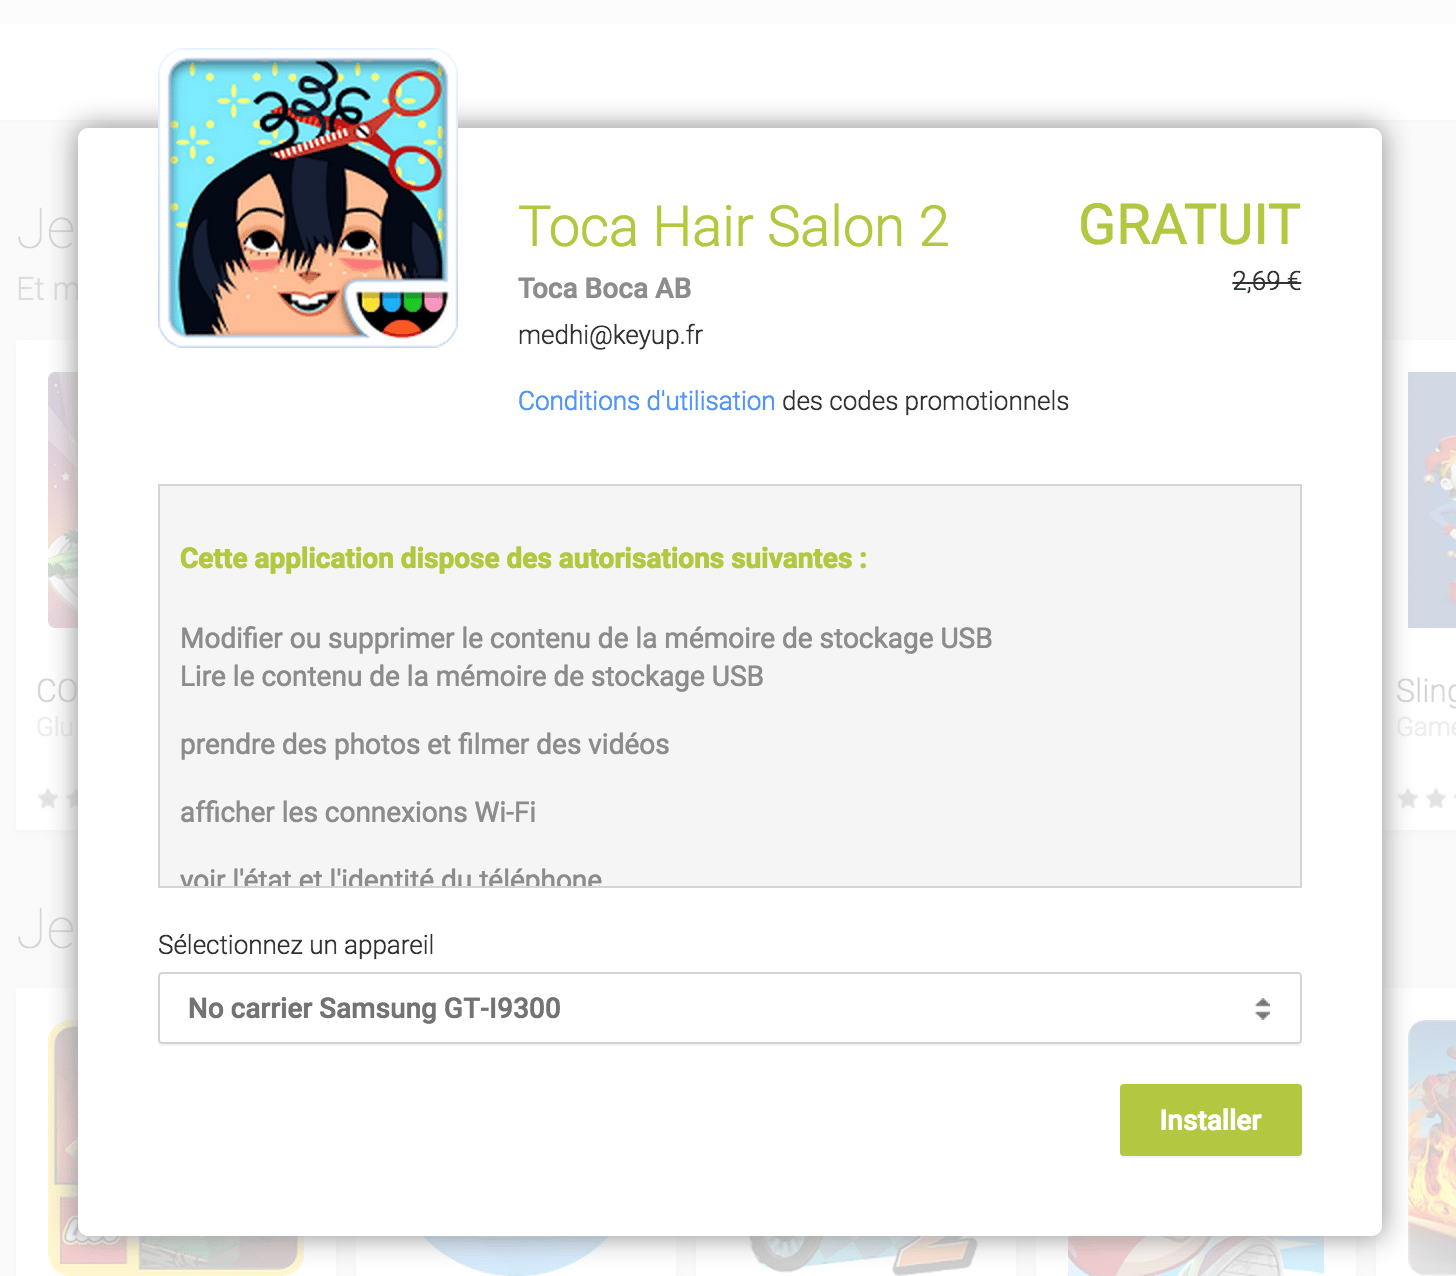 toca hair salon 2 gratuit